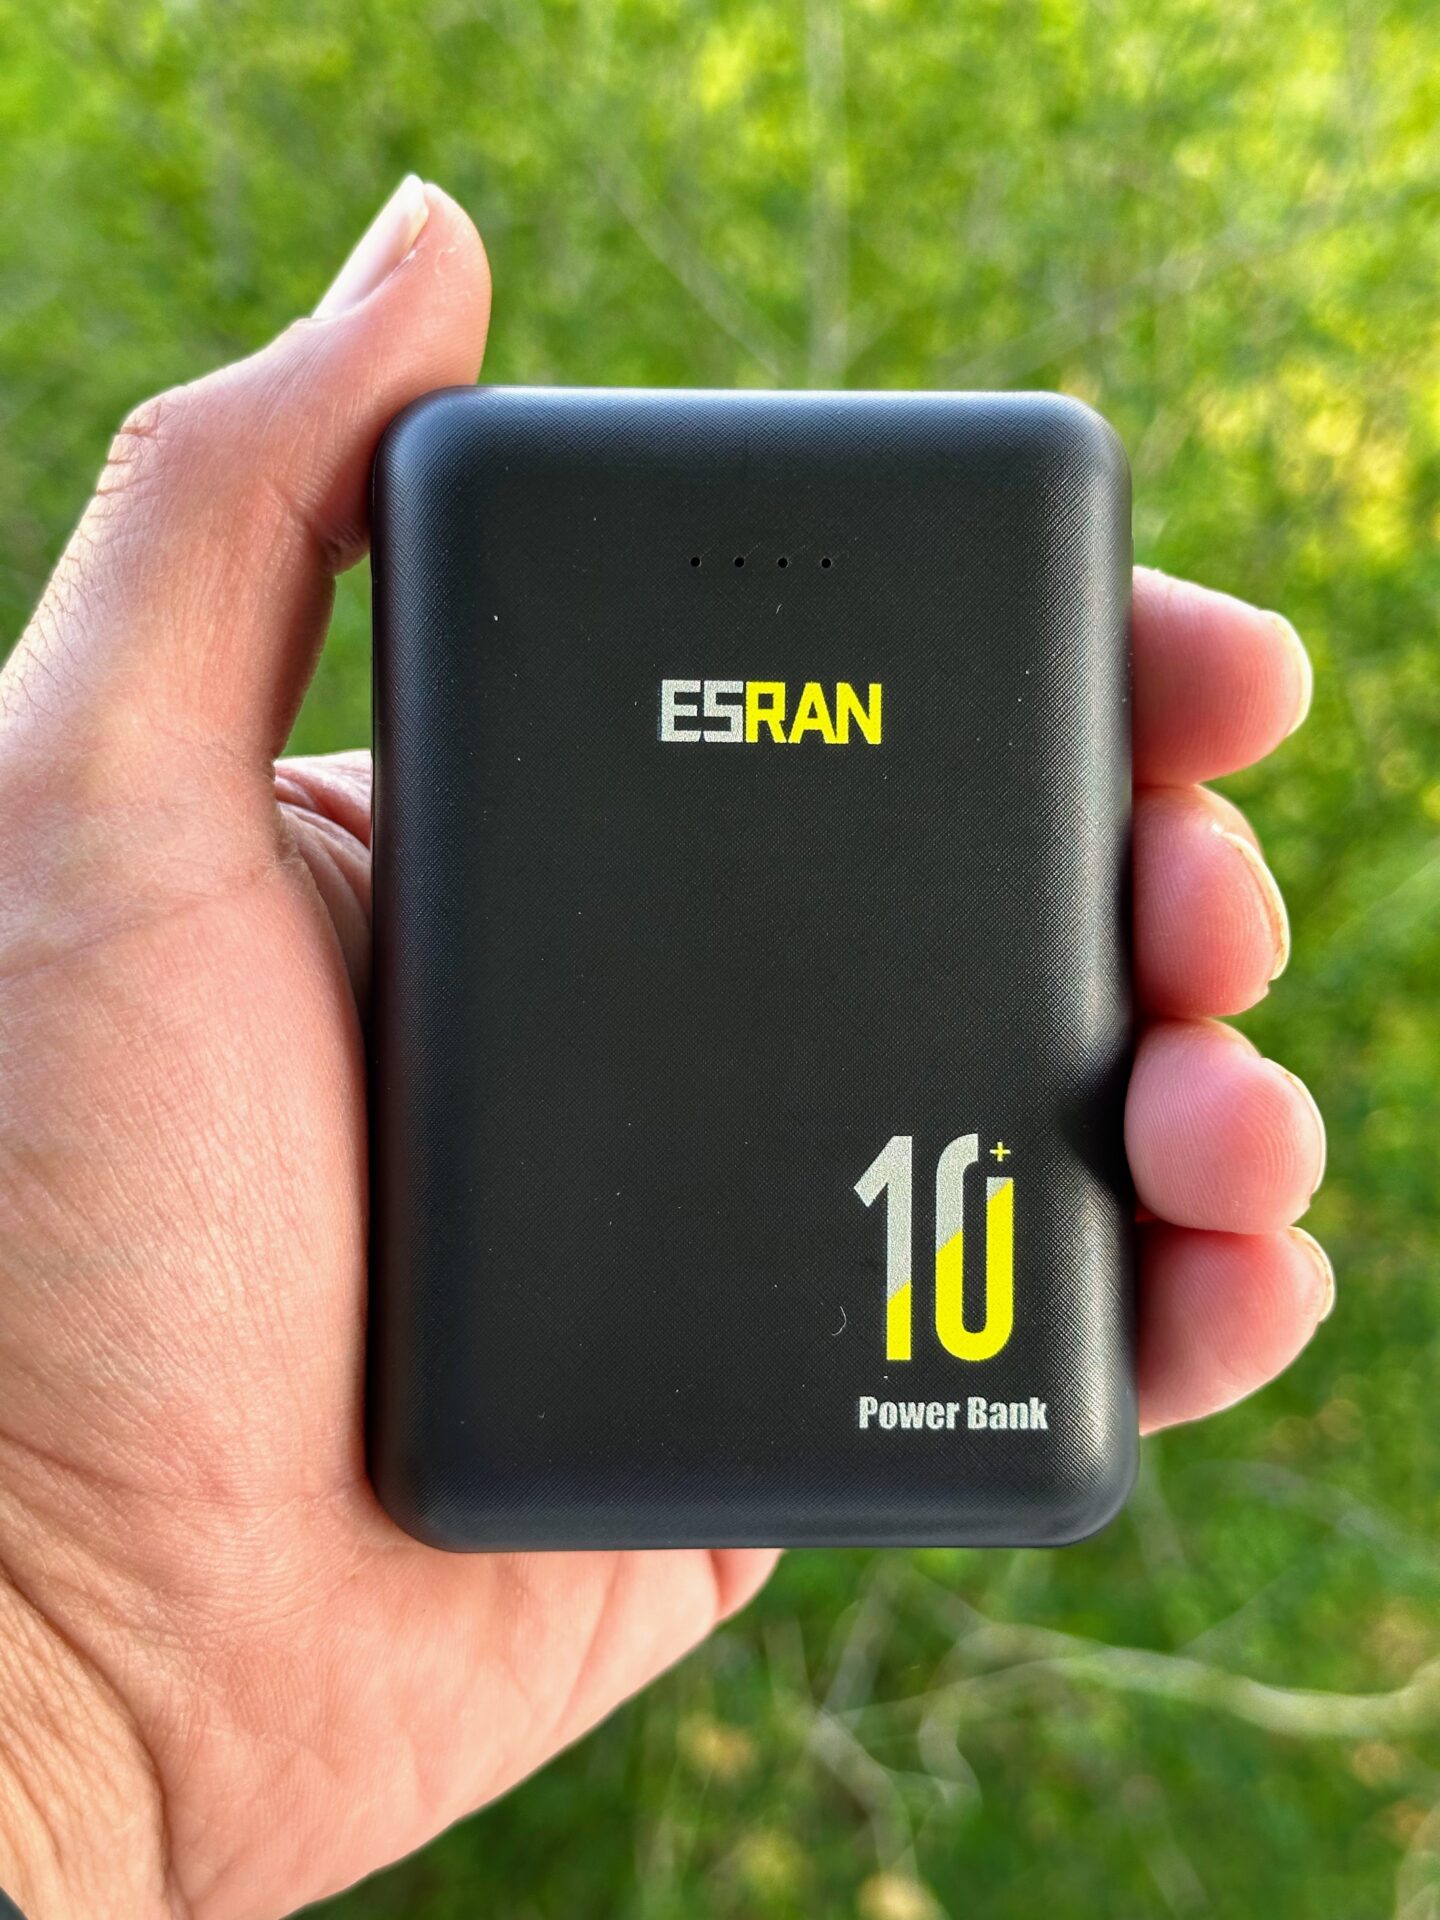 An image of the Esran ES-100 Power Bank